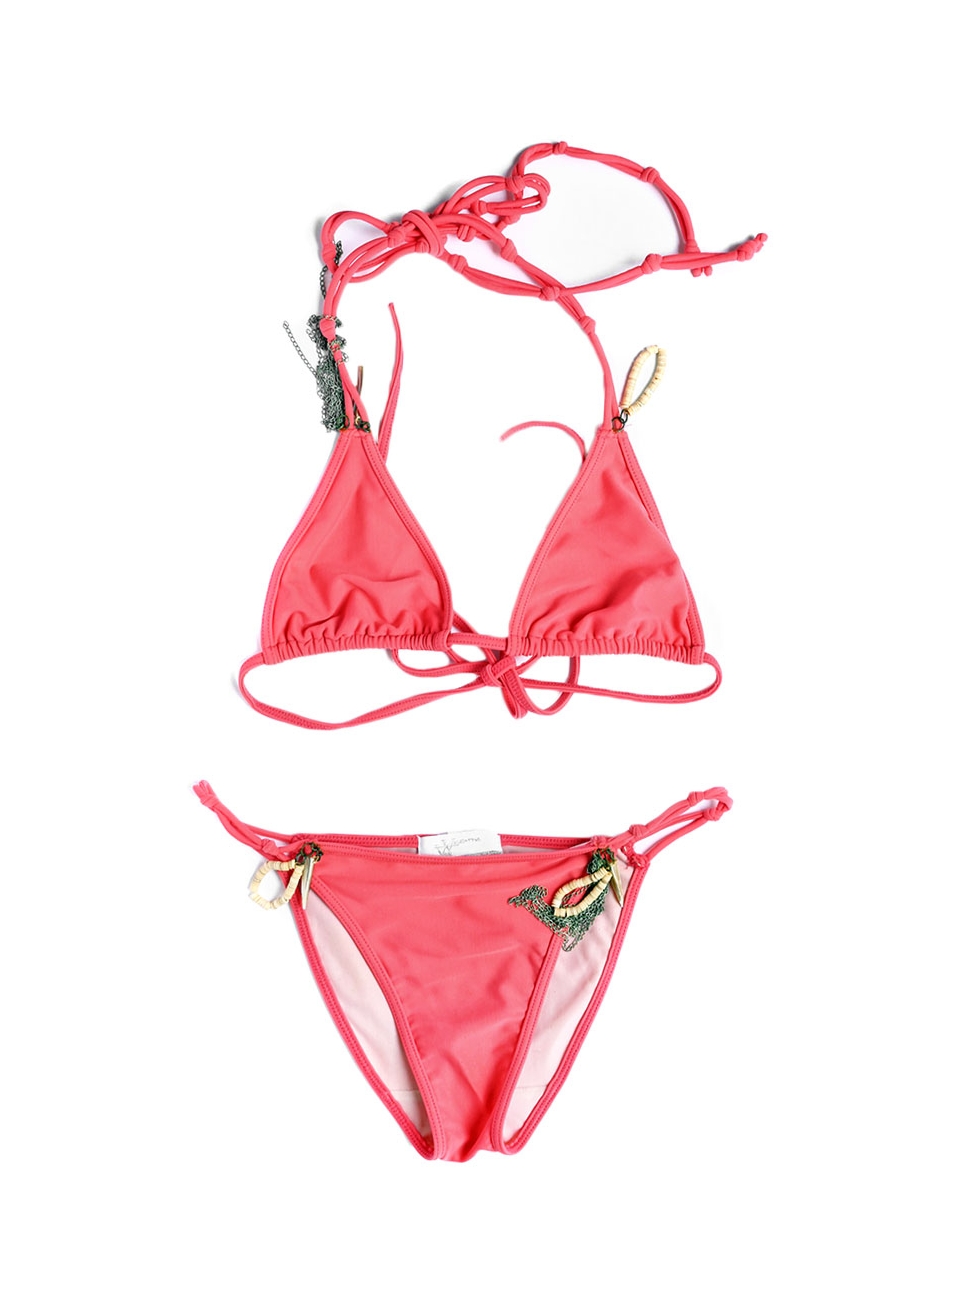 Absolutamente Fondos Usual Boutique Candy pink bikini swimsuit Retail price €230 Size 36 - Louise Paris